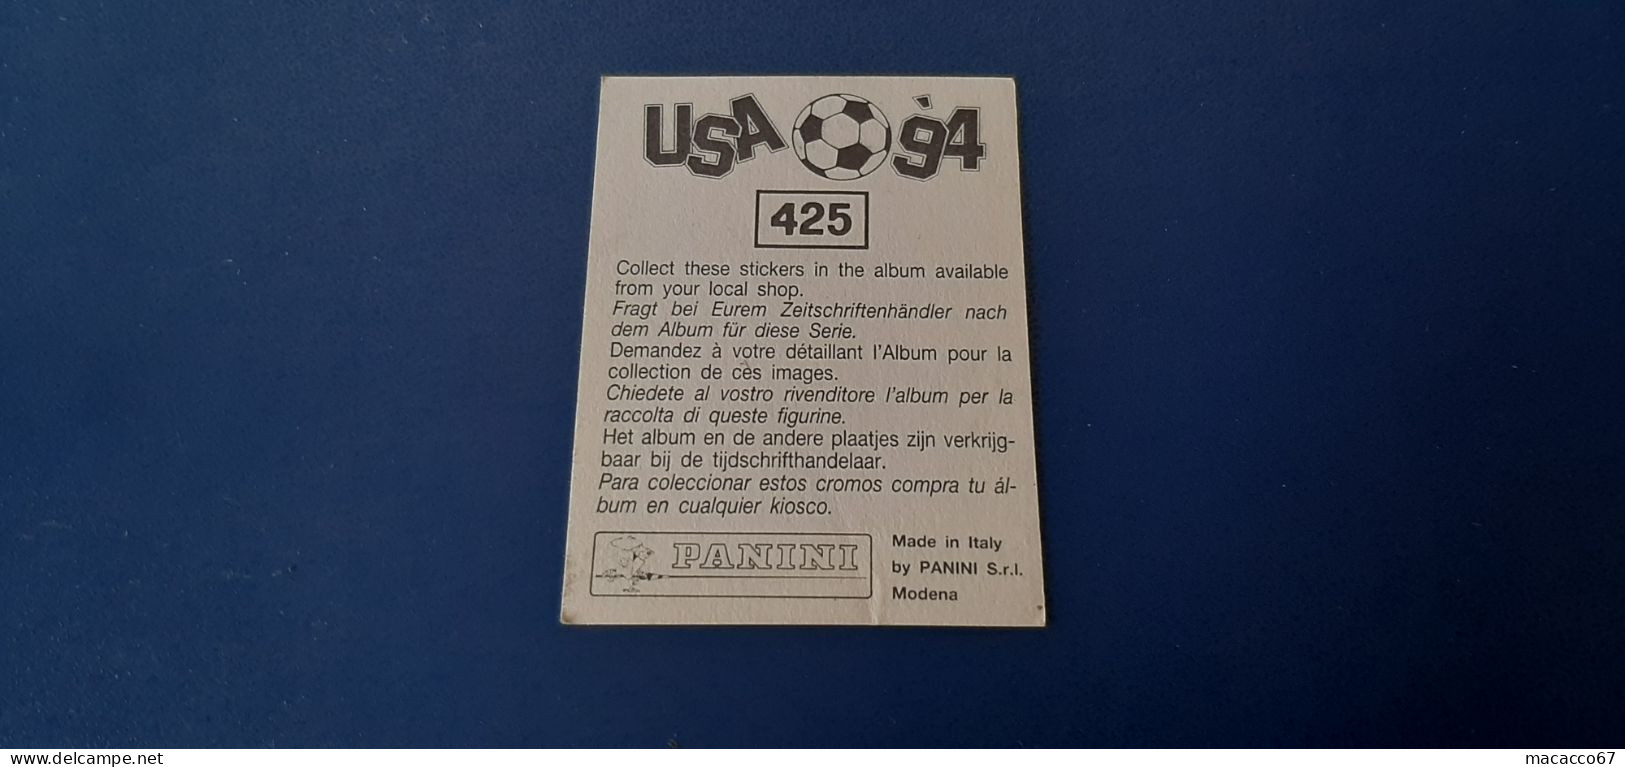 Figurina Panini WM USA 94 - 425 Jonk Olanda - Italienische Ausgabe